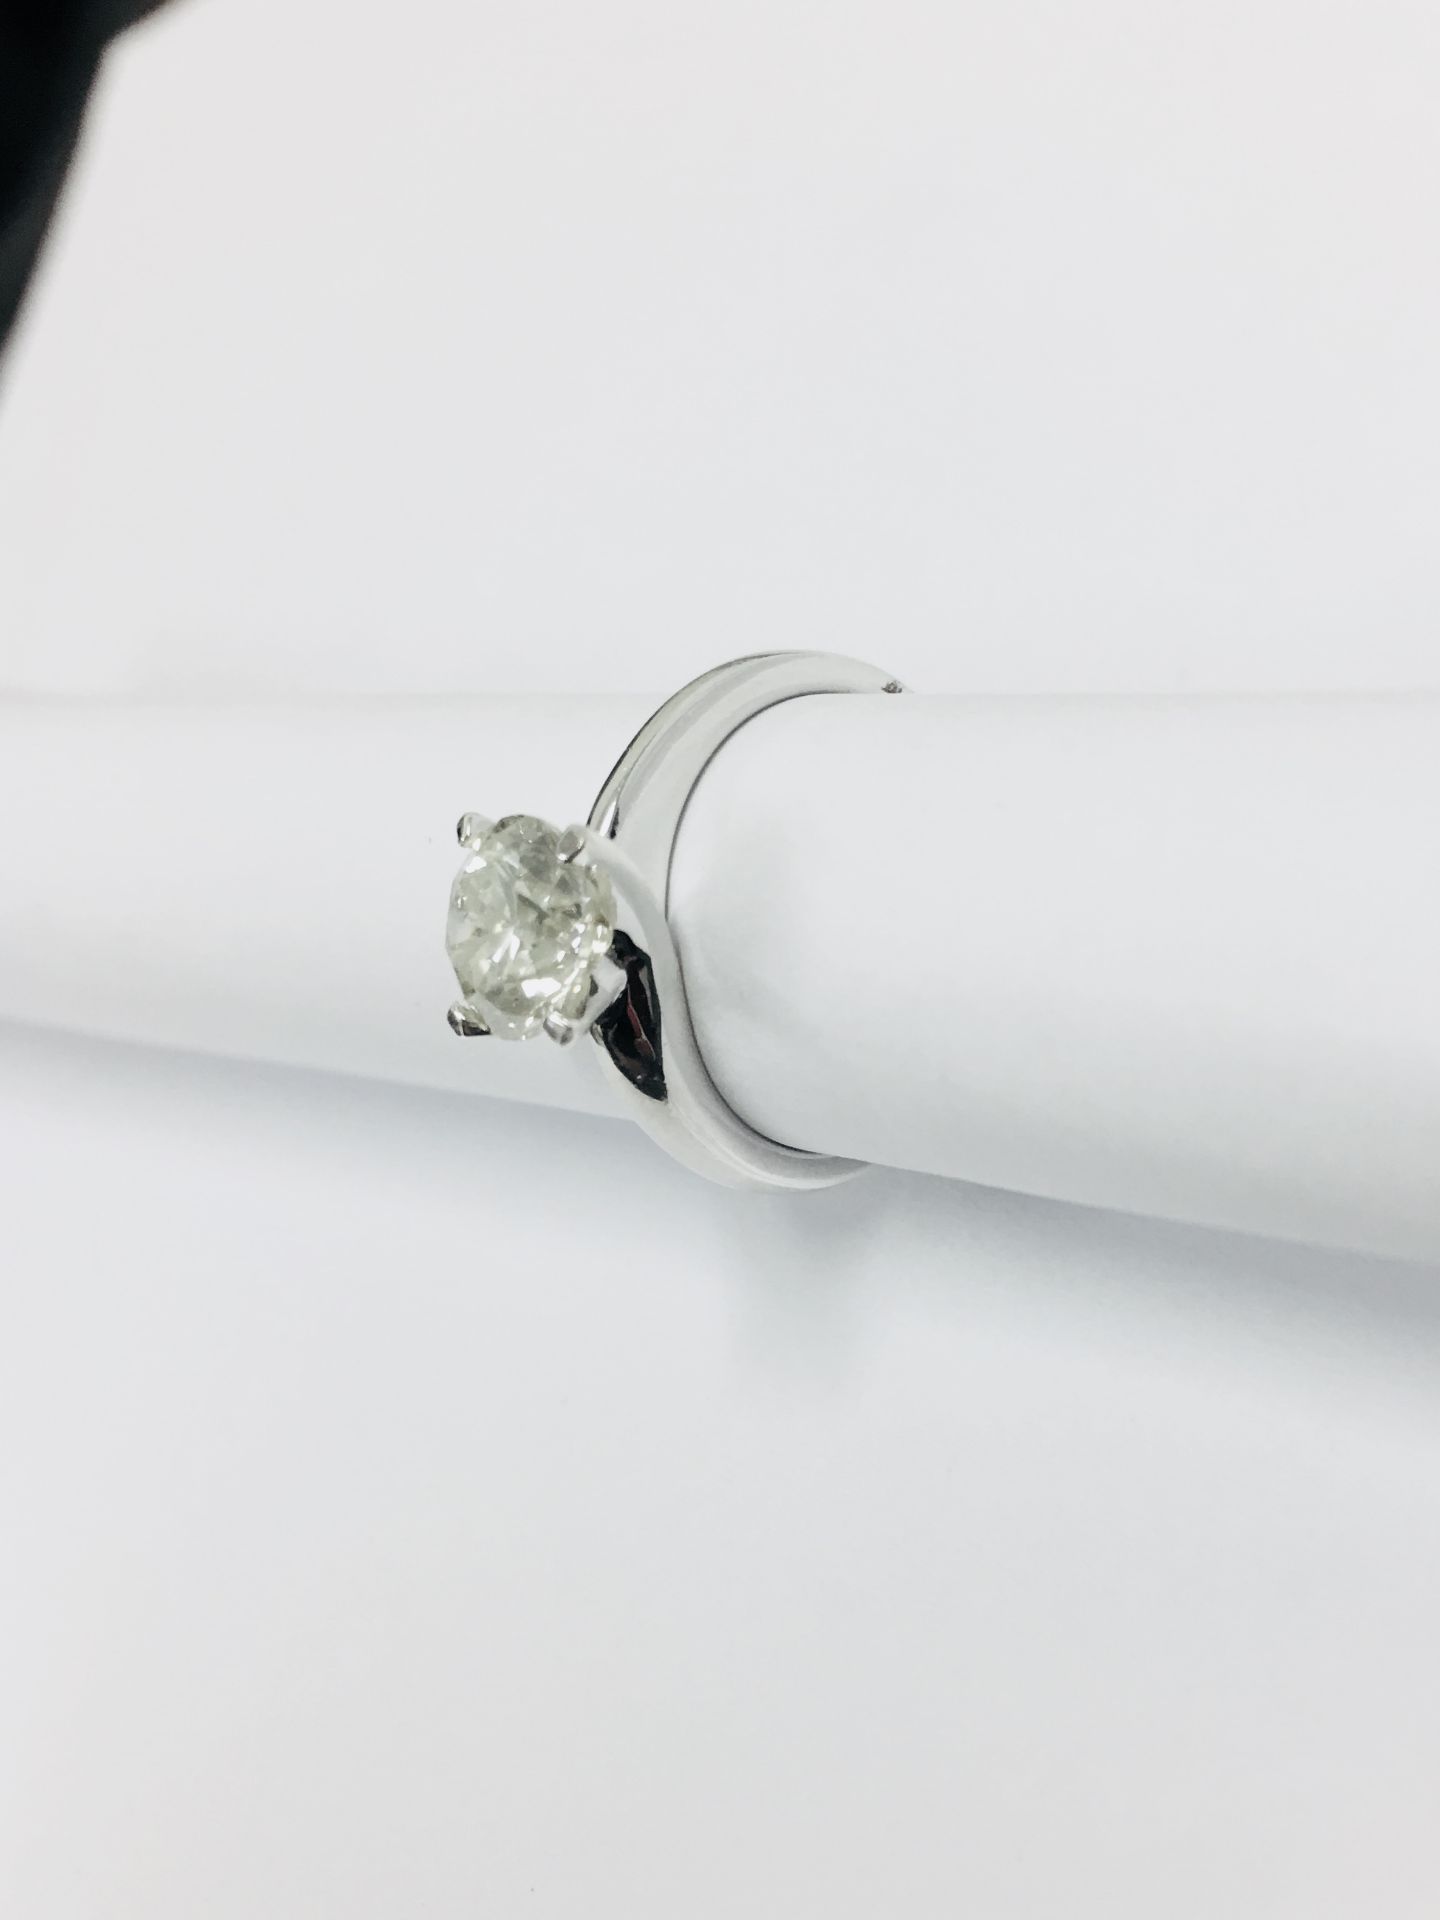 1.64ct Brilliant cut diamond f colour si3 clarity natural ,platinum diamond mount 3.5gms,uk hallmark - Image 2 of 4